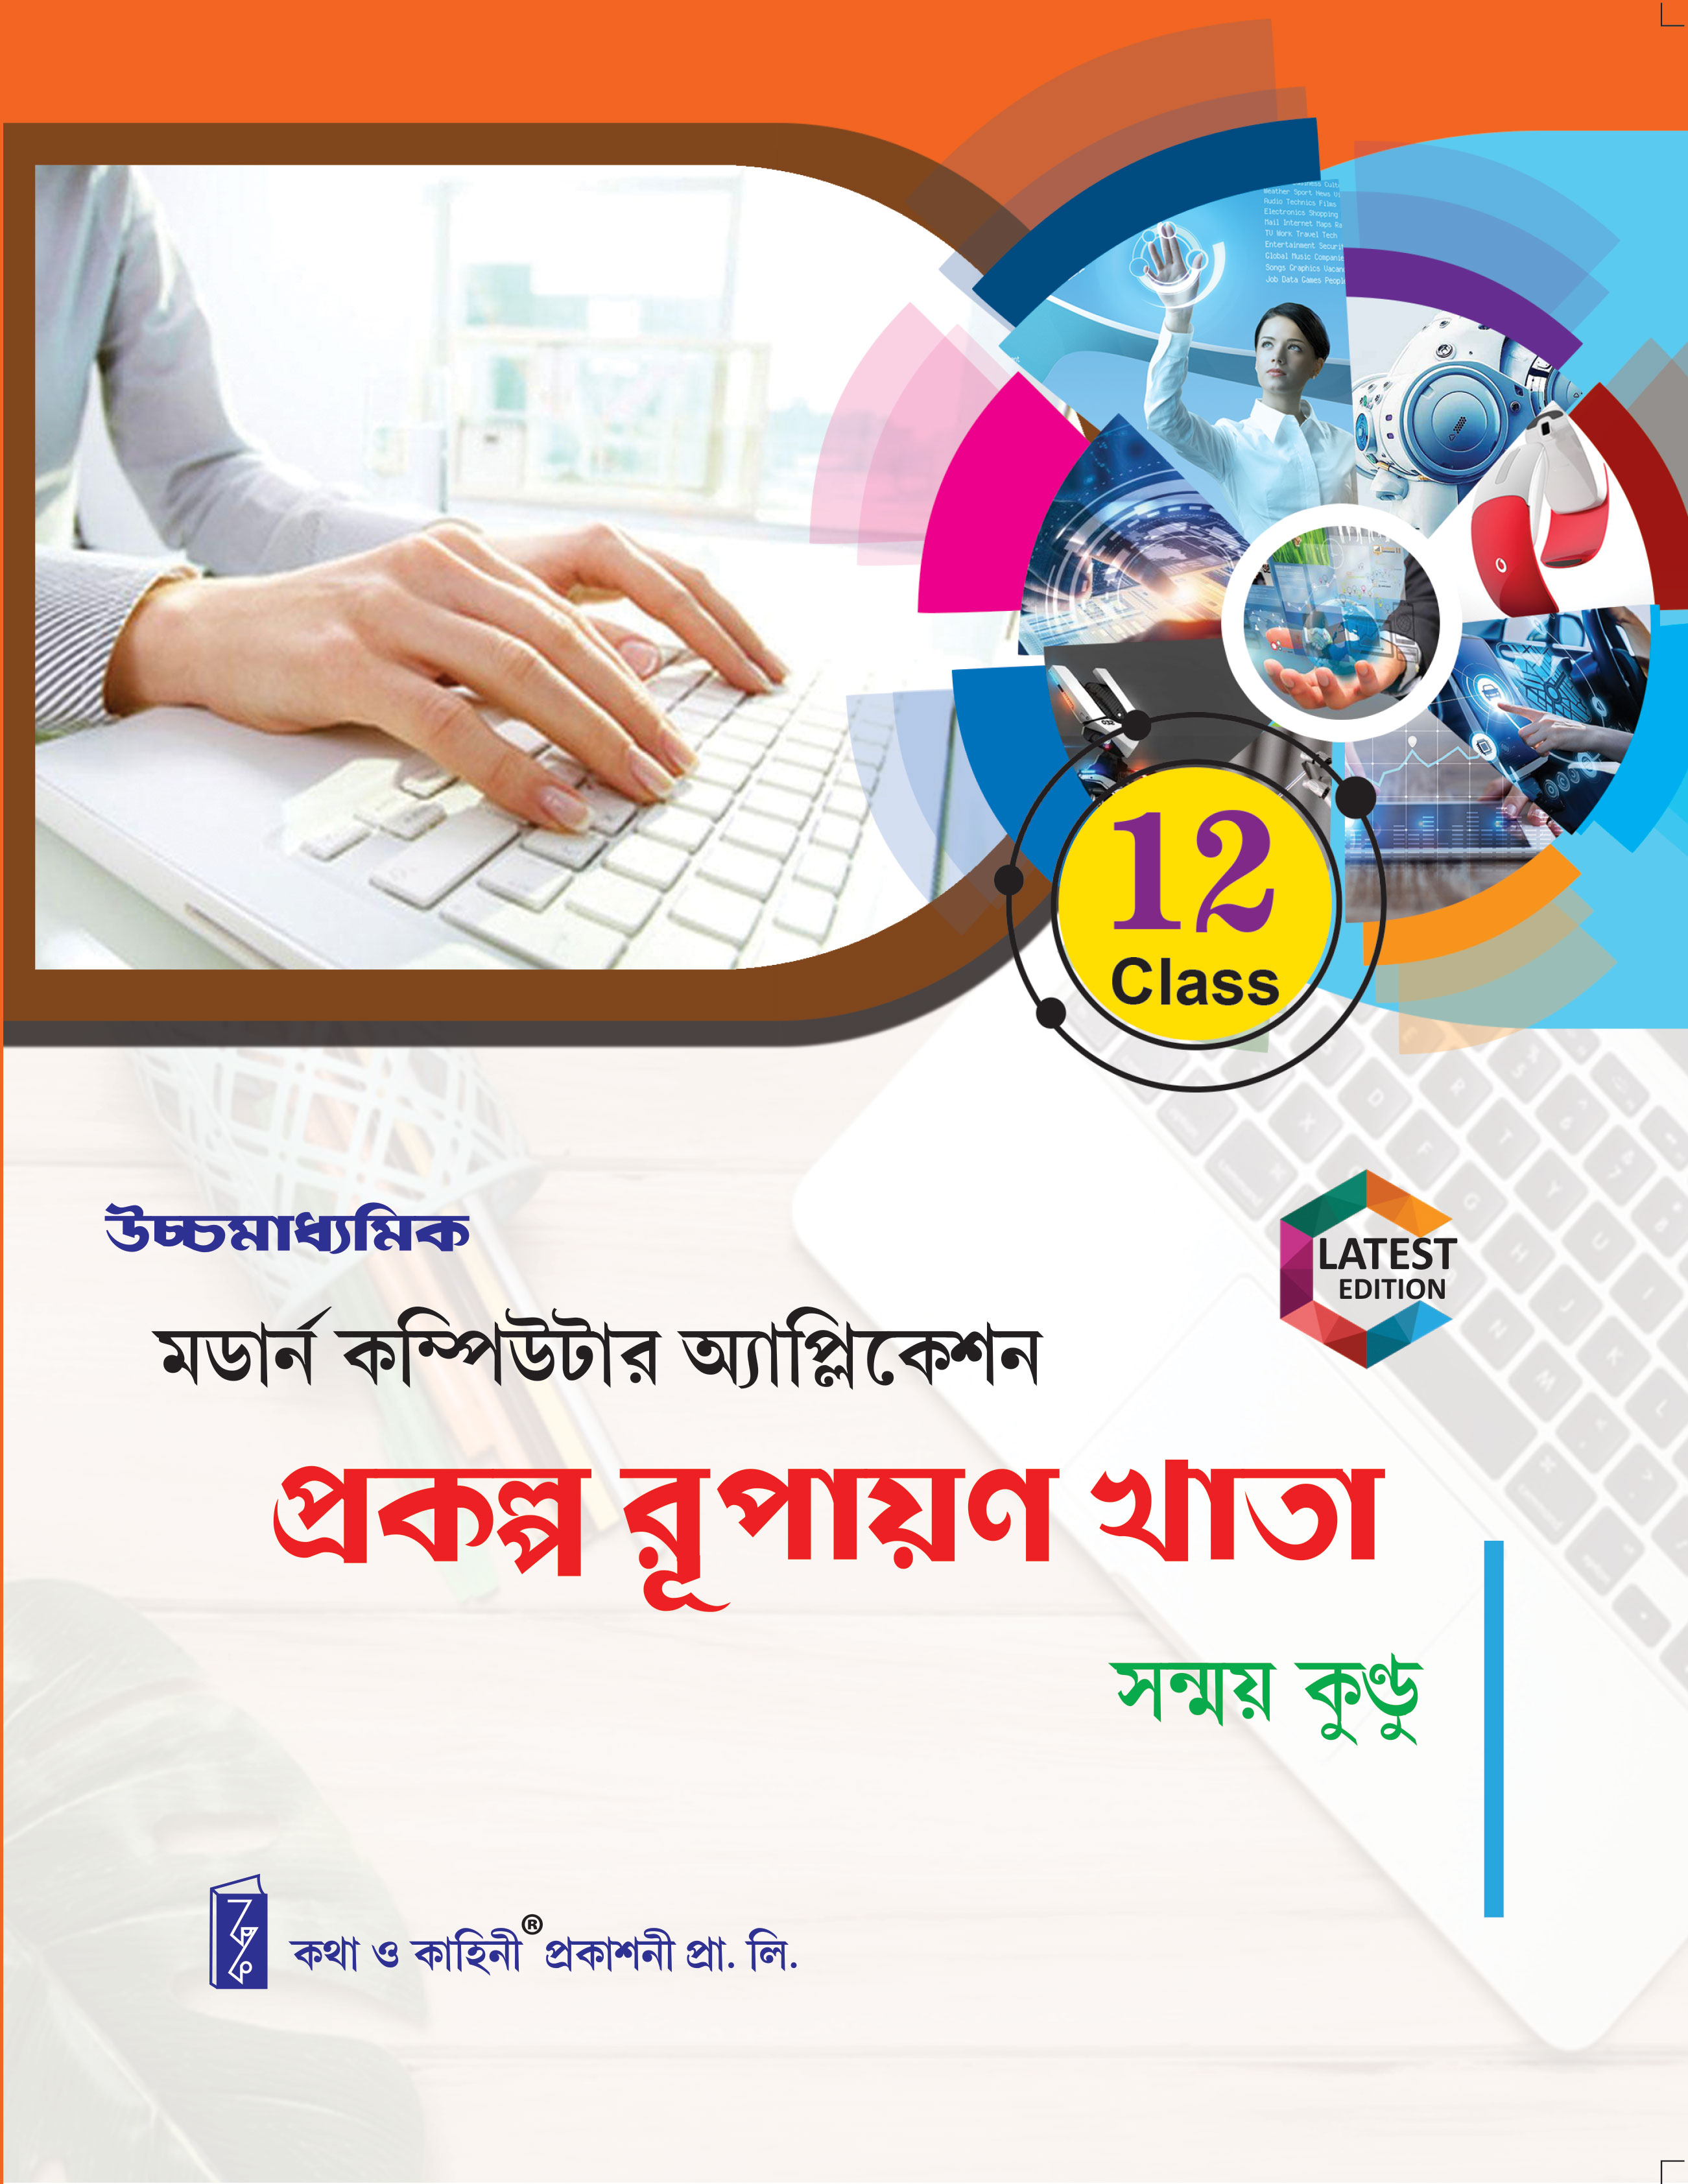 Ucchamadhyamik Modern Computer Application Prokolpo Rupayan Khata _Class 12 (Bengali Version)